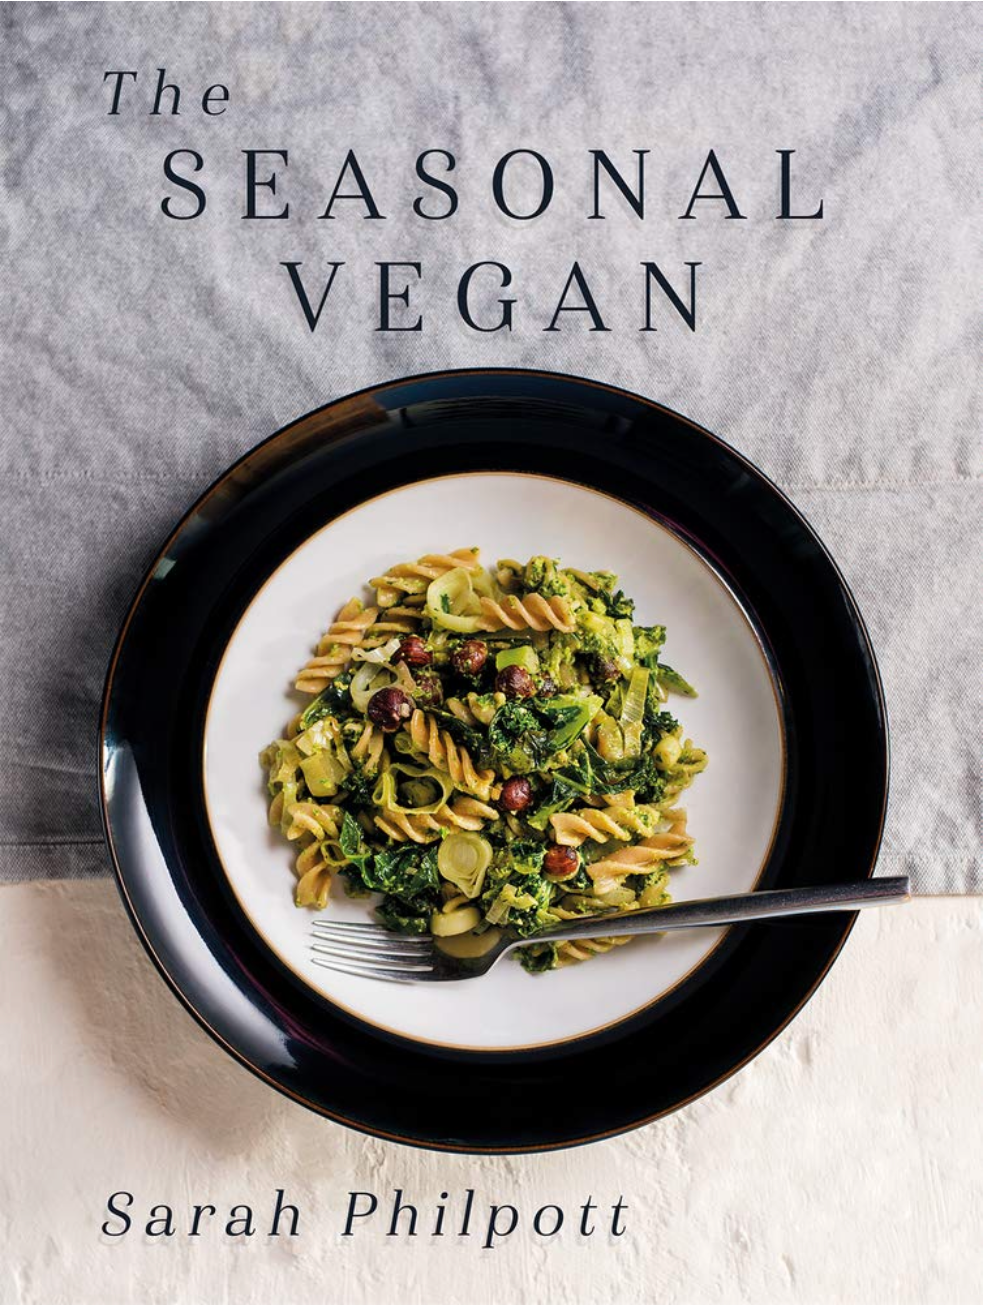 The Seasonal Vegan (Sarah Philpott)